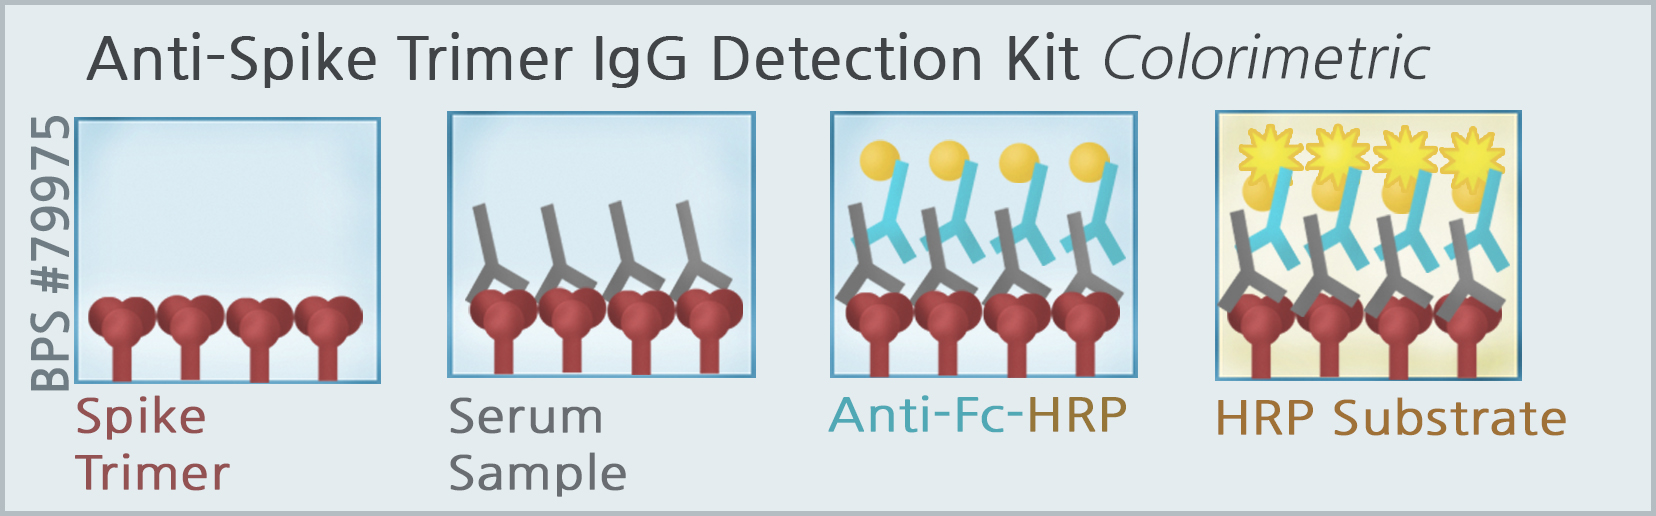 humane dagbog Arbejdsløs SARS-CoV-2 IgG Detection Kit (Colorimetric Anti-Spike IgG detection)